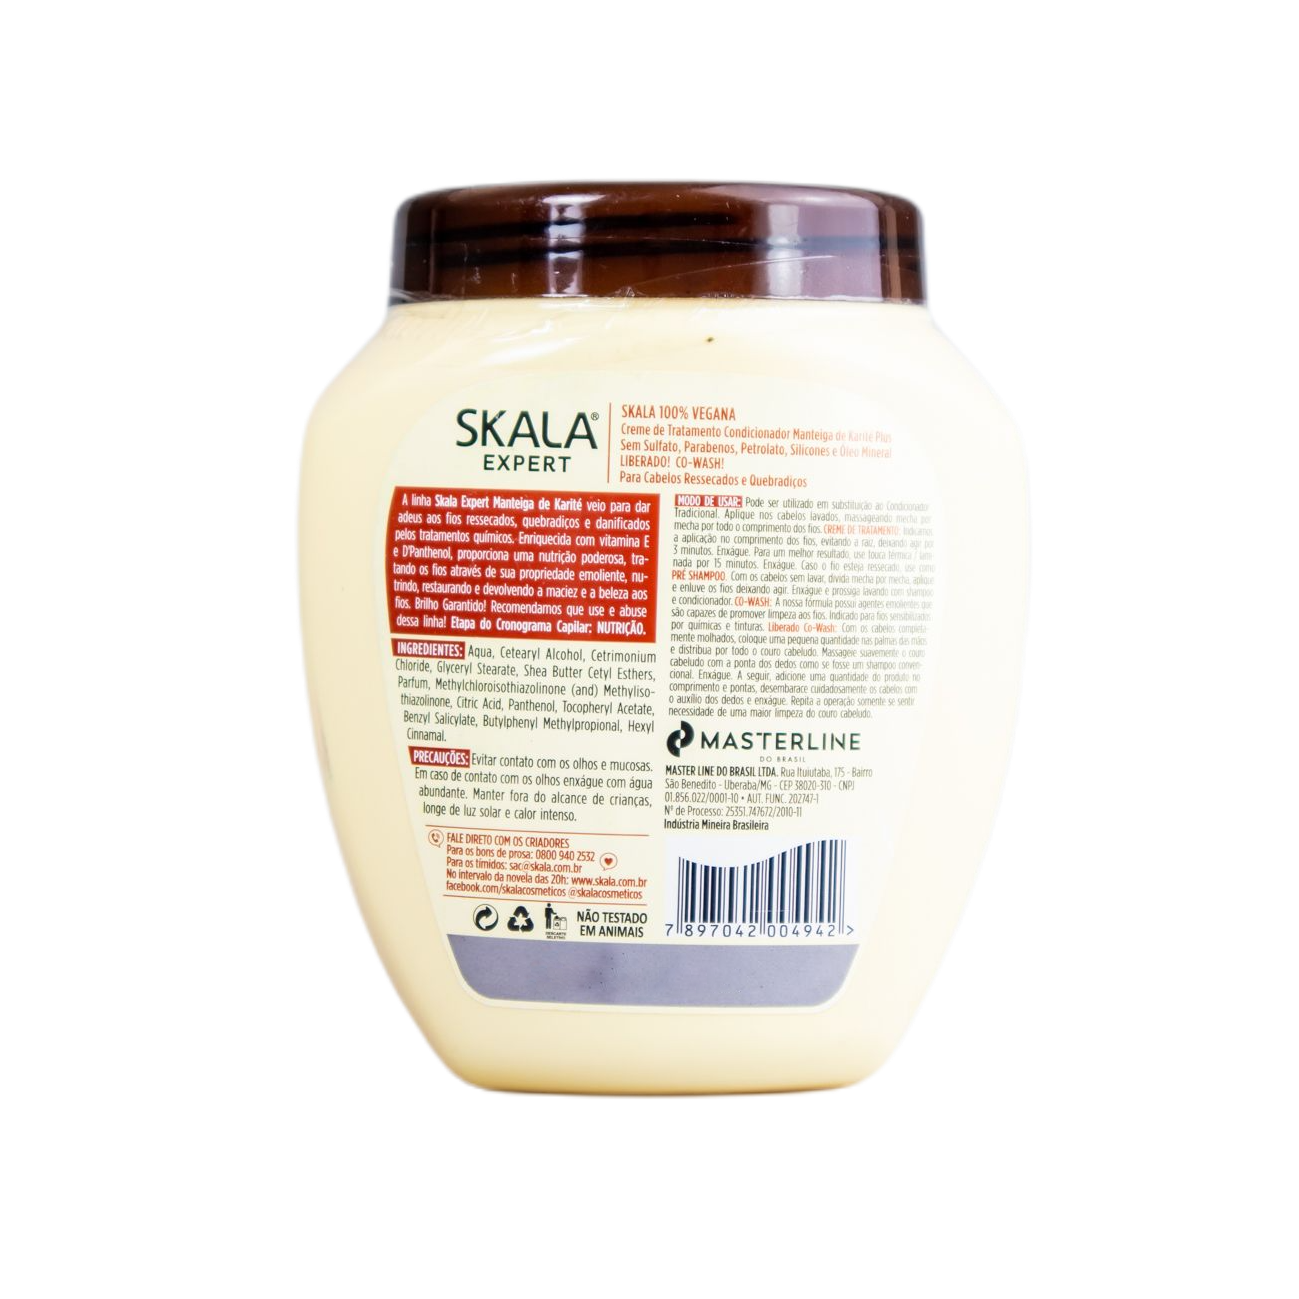 Skala Treatment Cream Creme De Tratamento Manteiga De Karité / Treatment Cream Shea Butter Treatment Cream - Skala